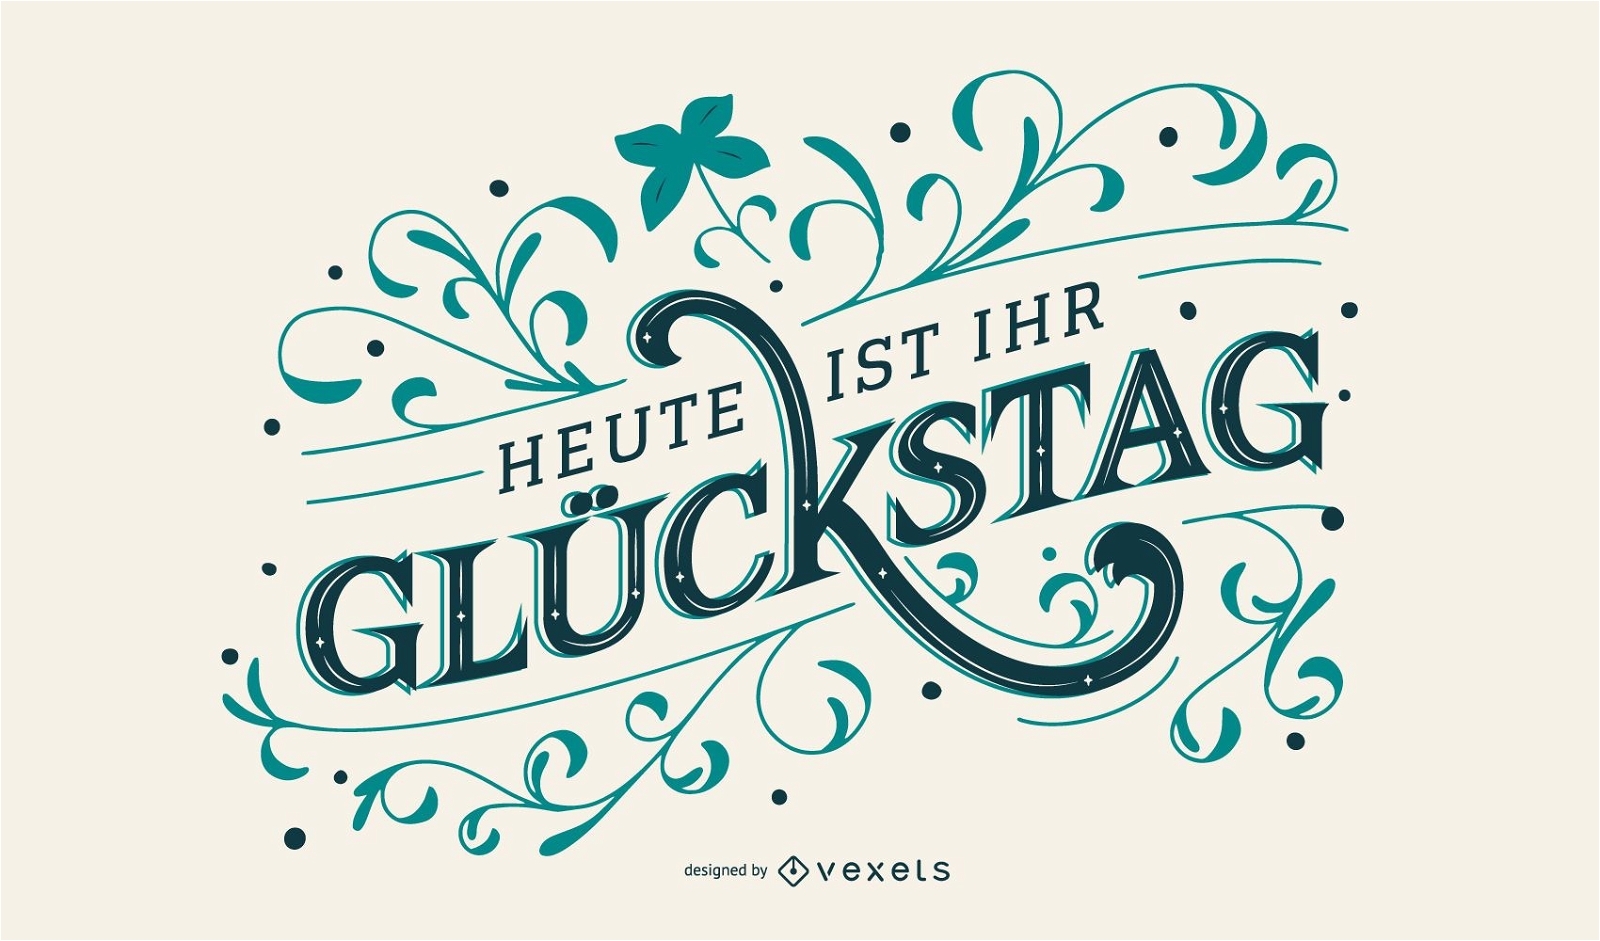 St patrick's german lettering design